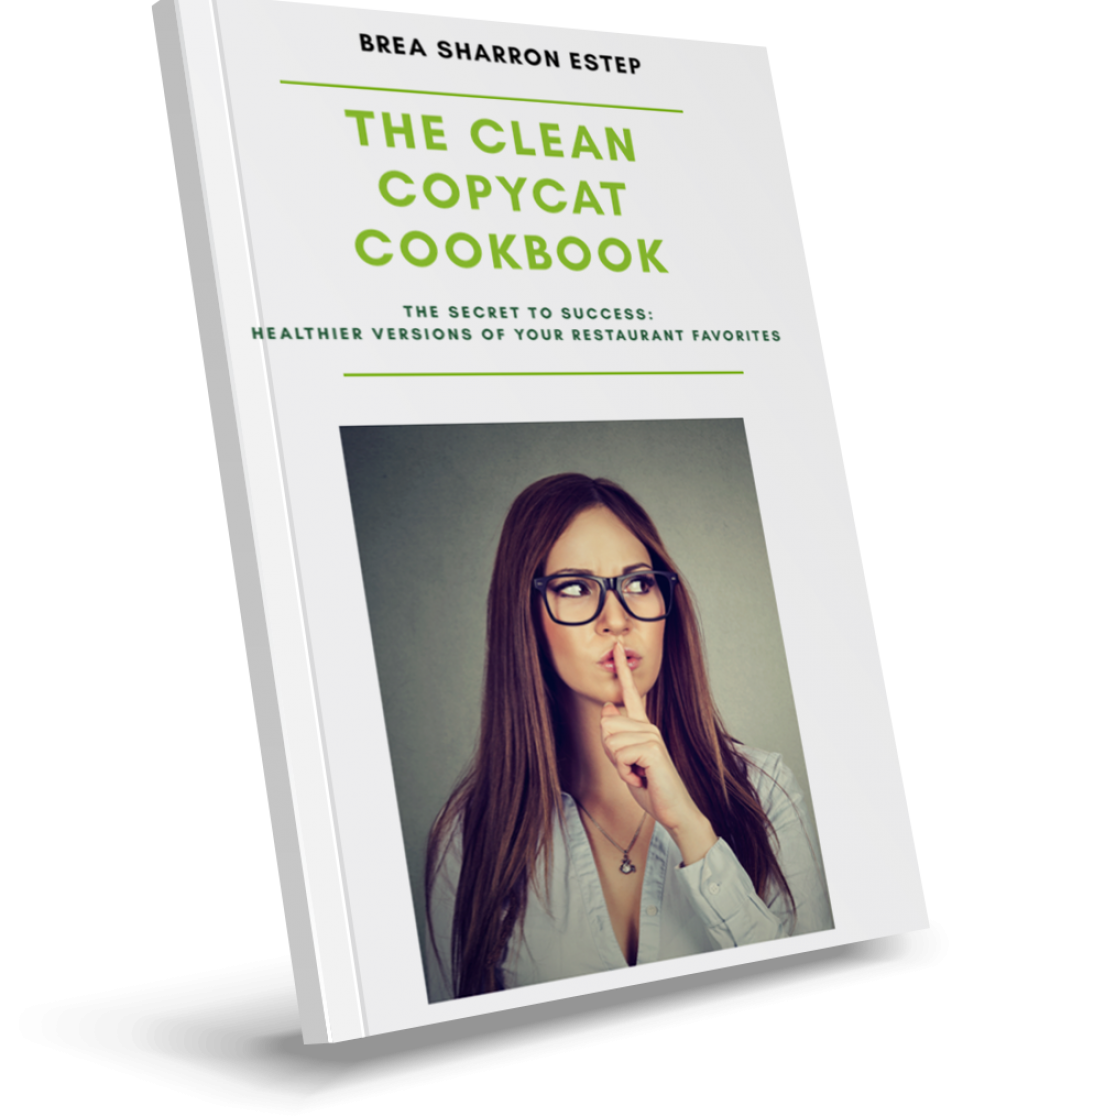 The Clean Copycat Cookbook